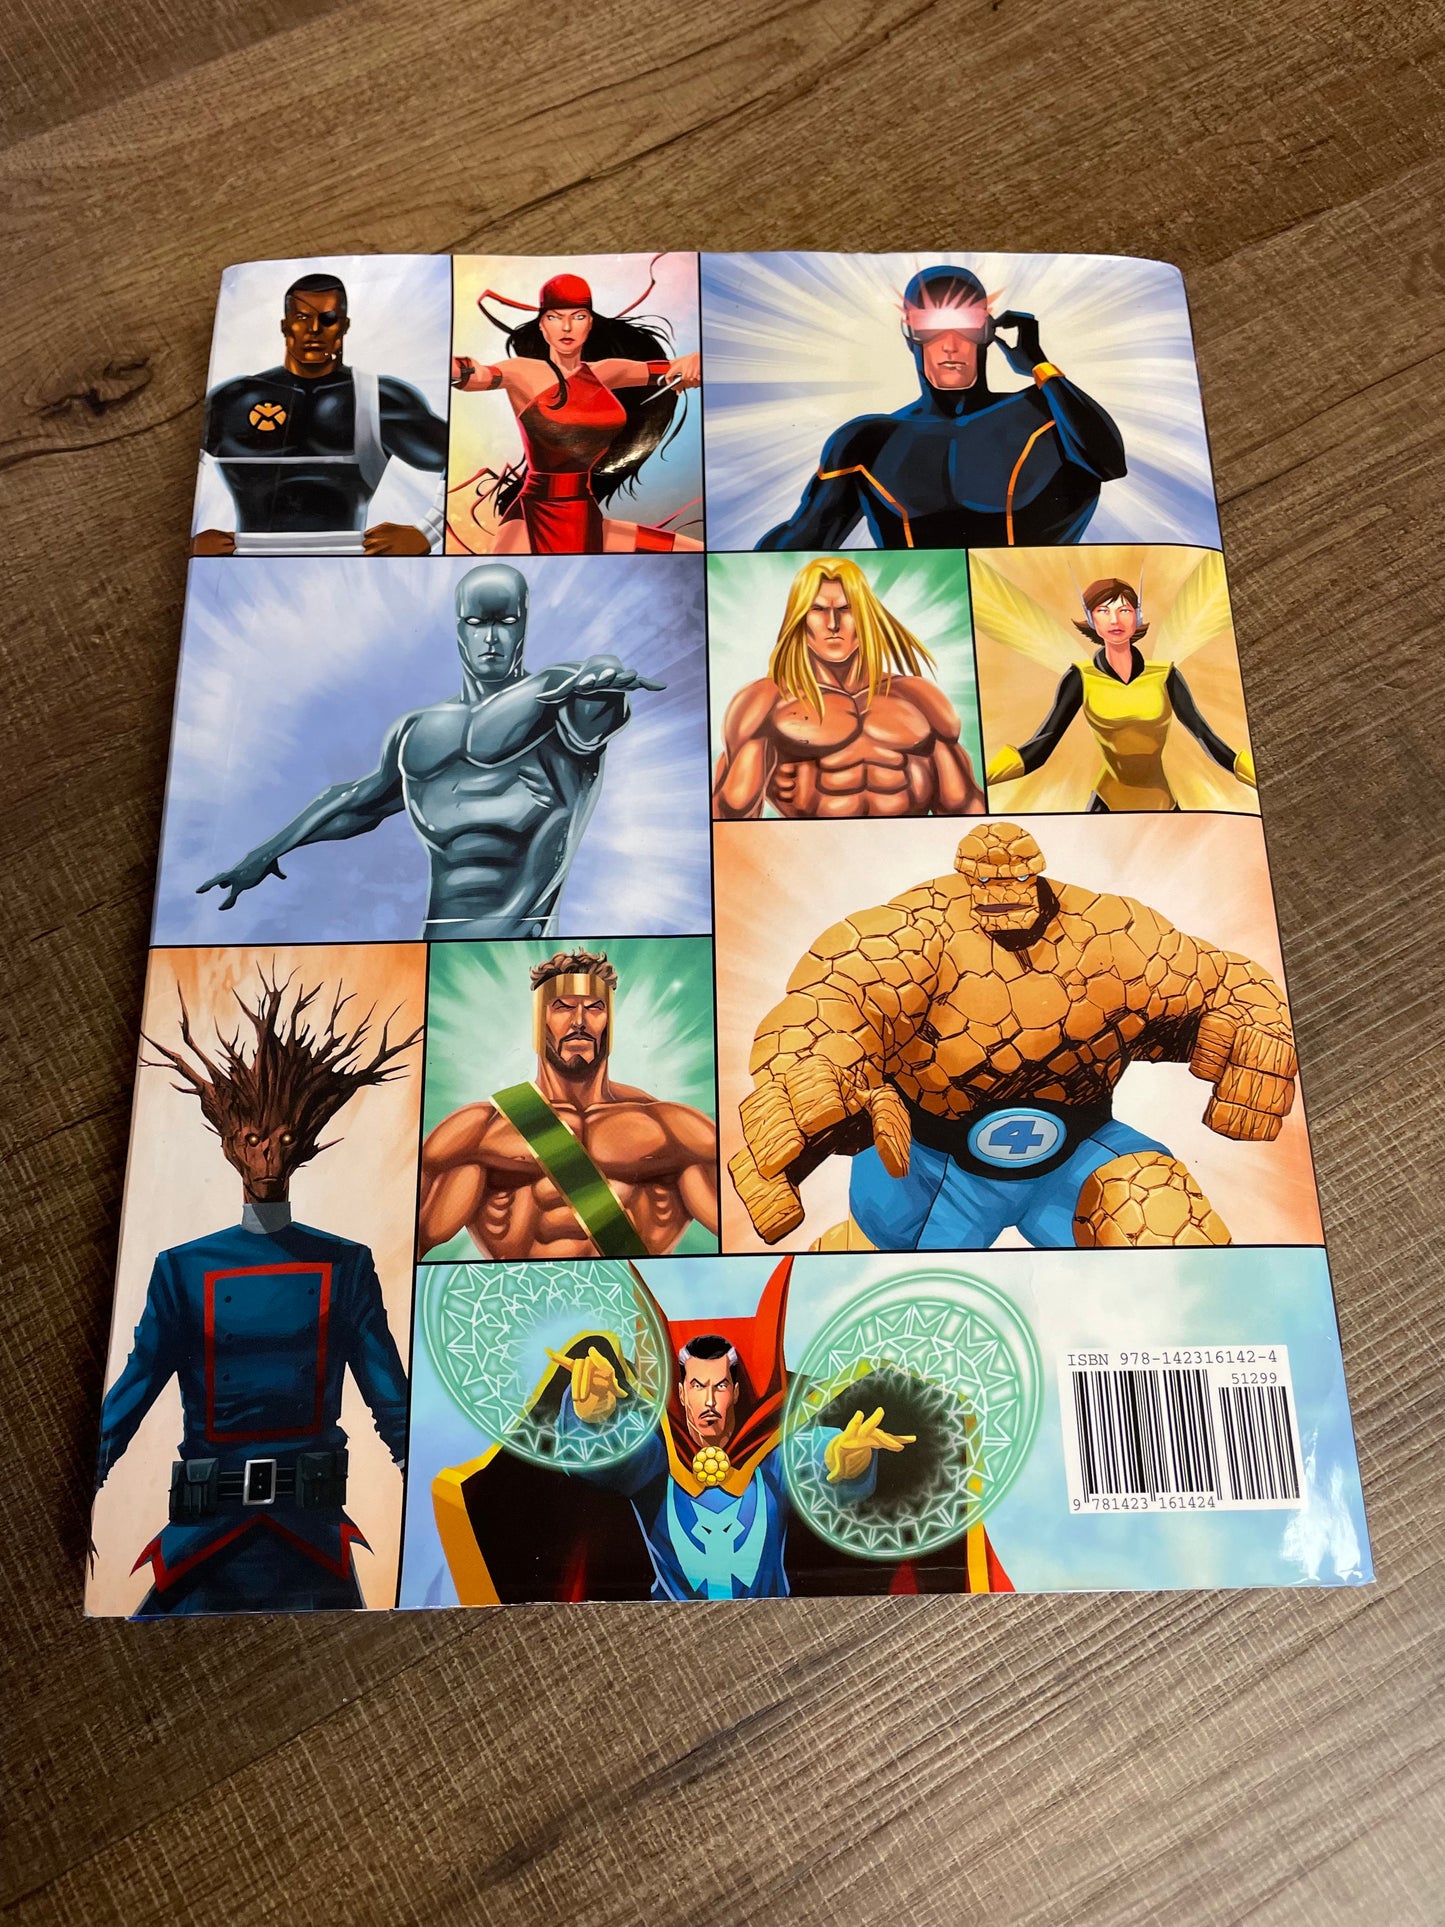 Meet the Marvel Superhero's Hardcover Book